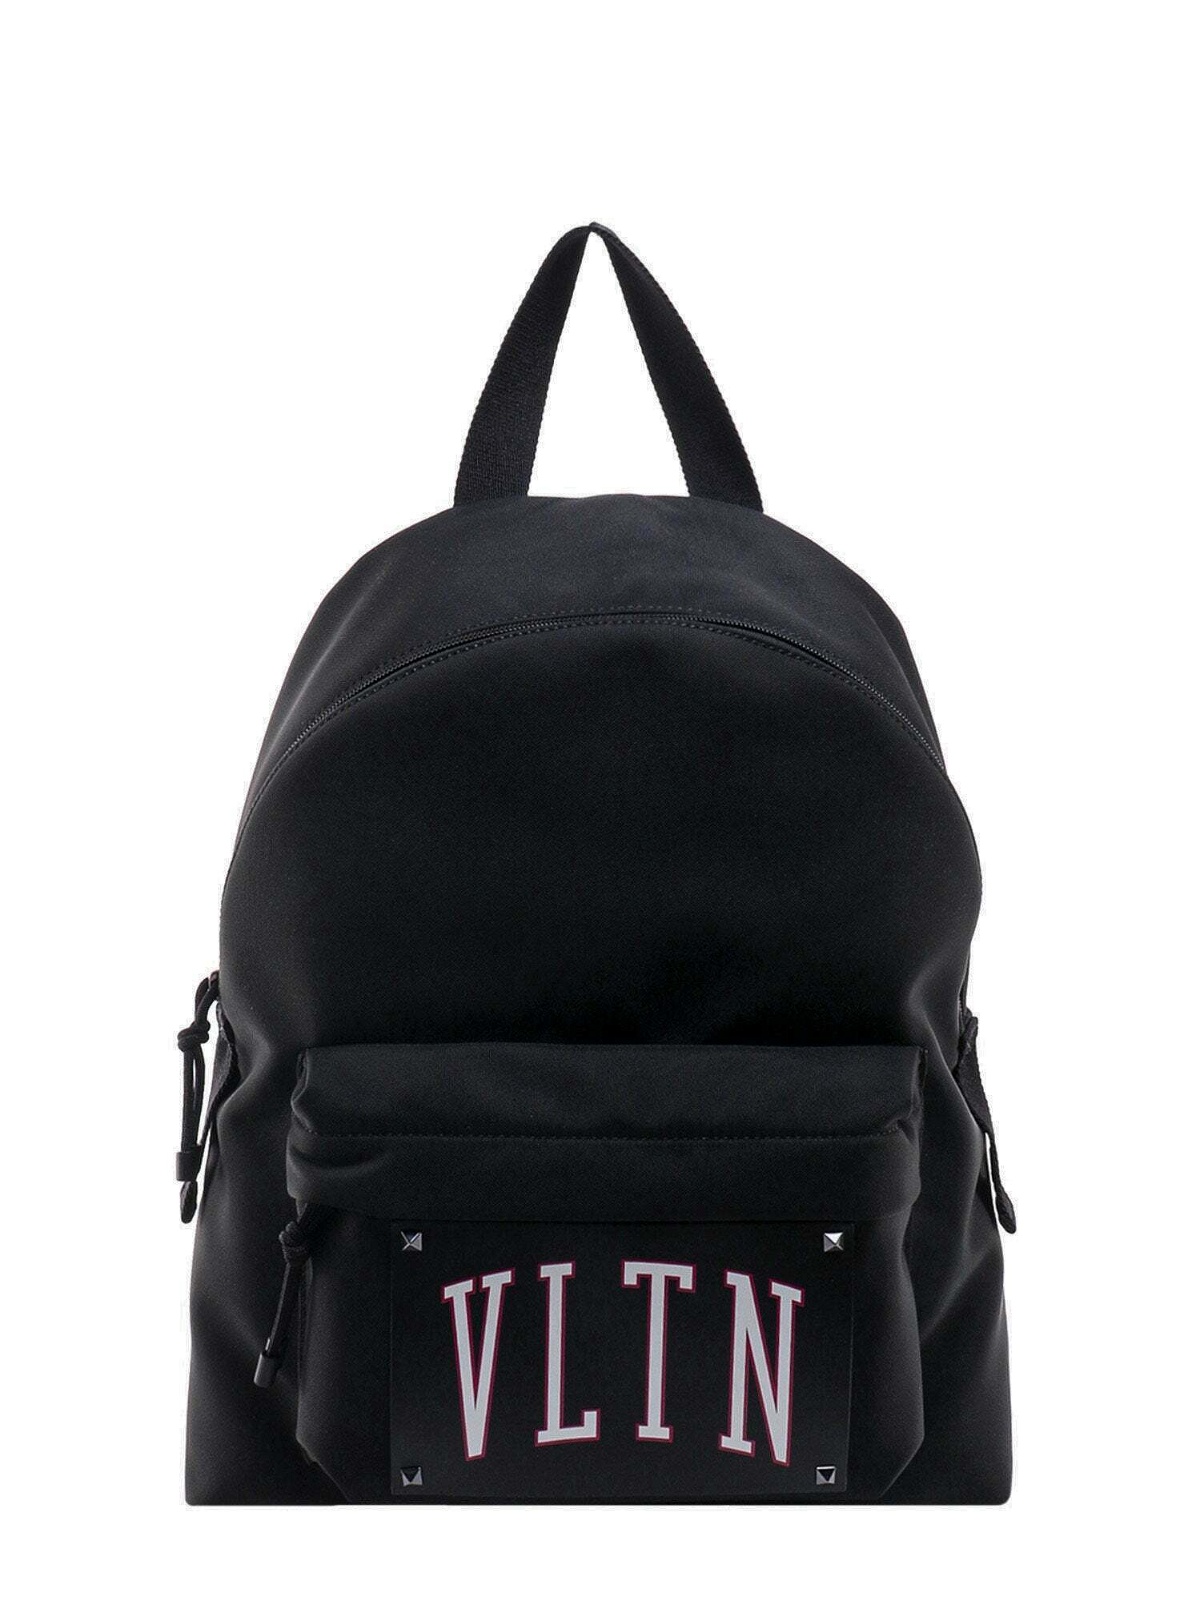 Valentino - Valentino Garavani Rockstud Pebble-Grain Leather Backpack - Men  - Black Valentino Garavani